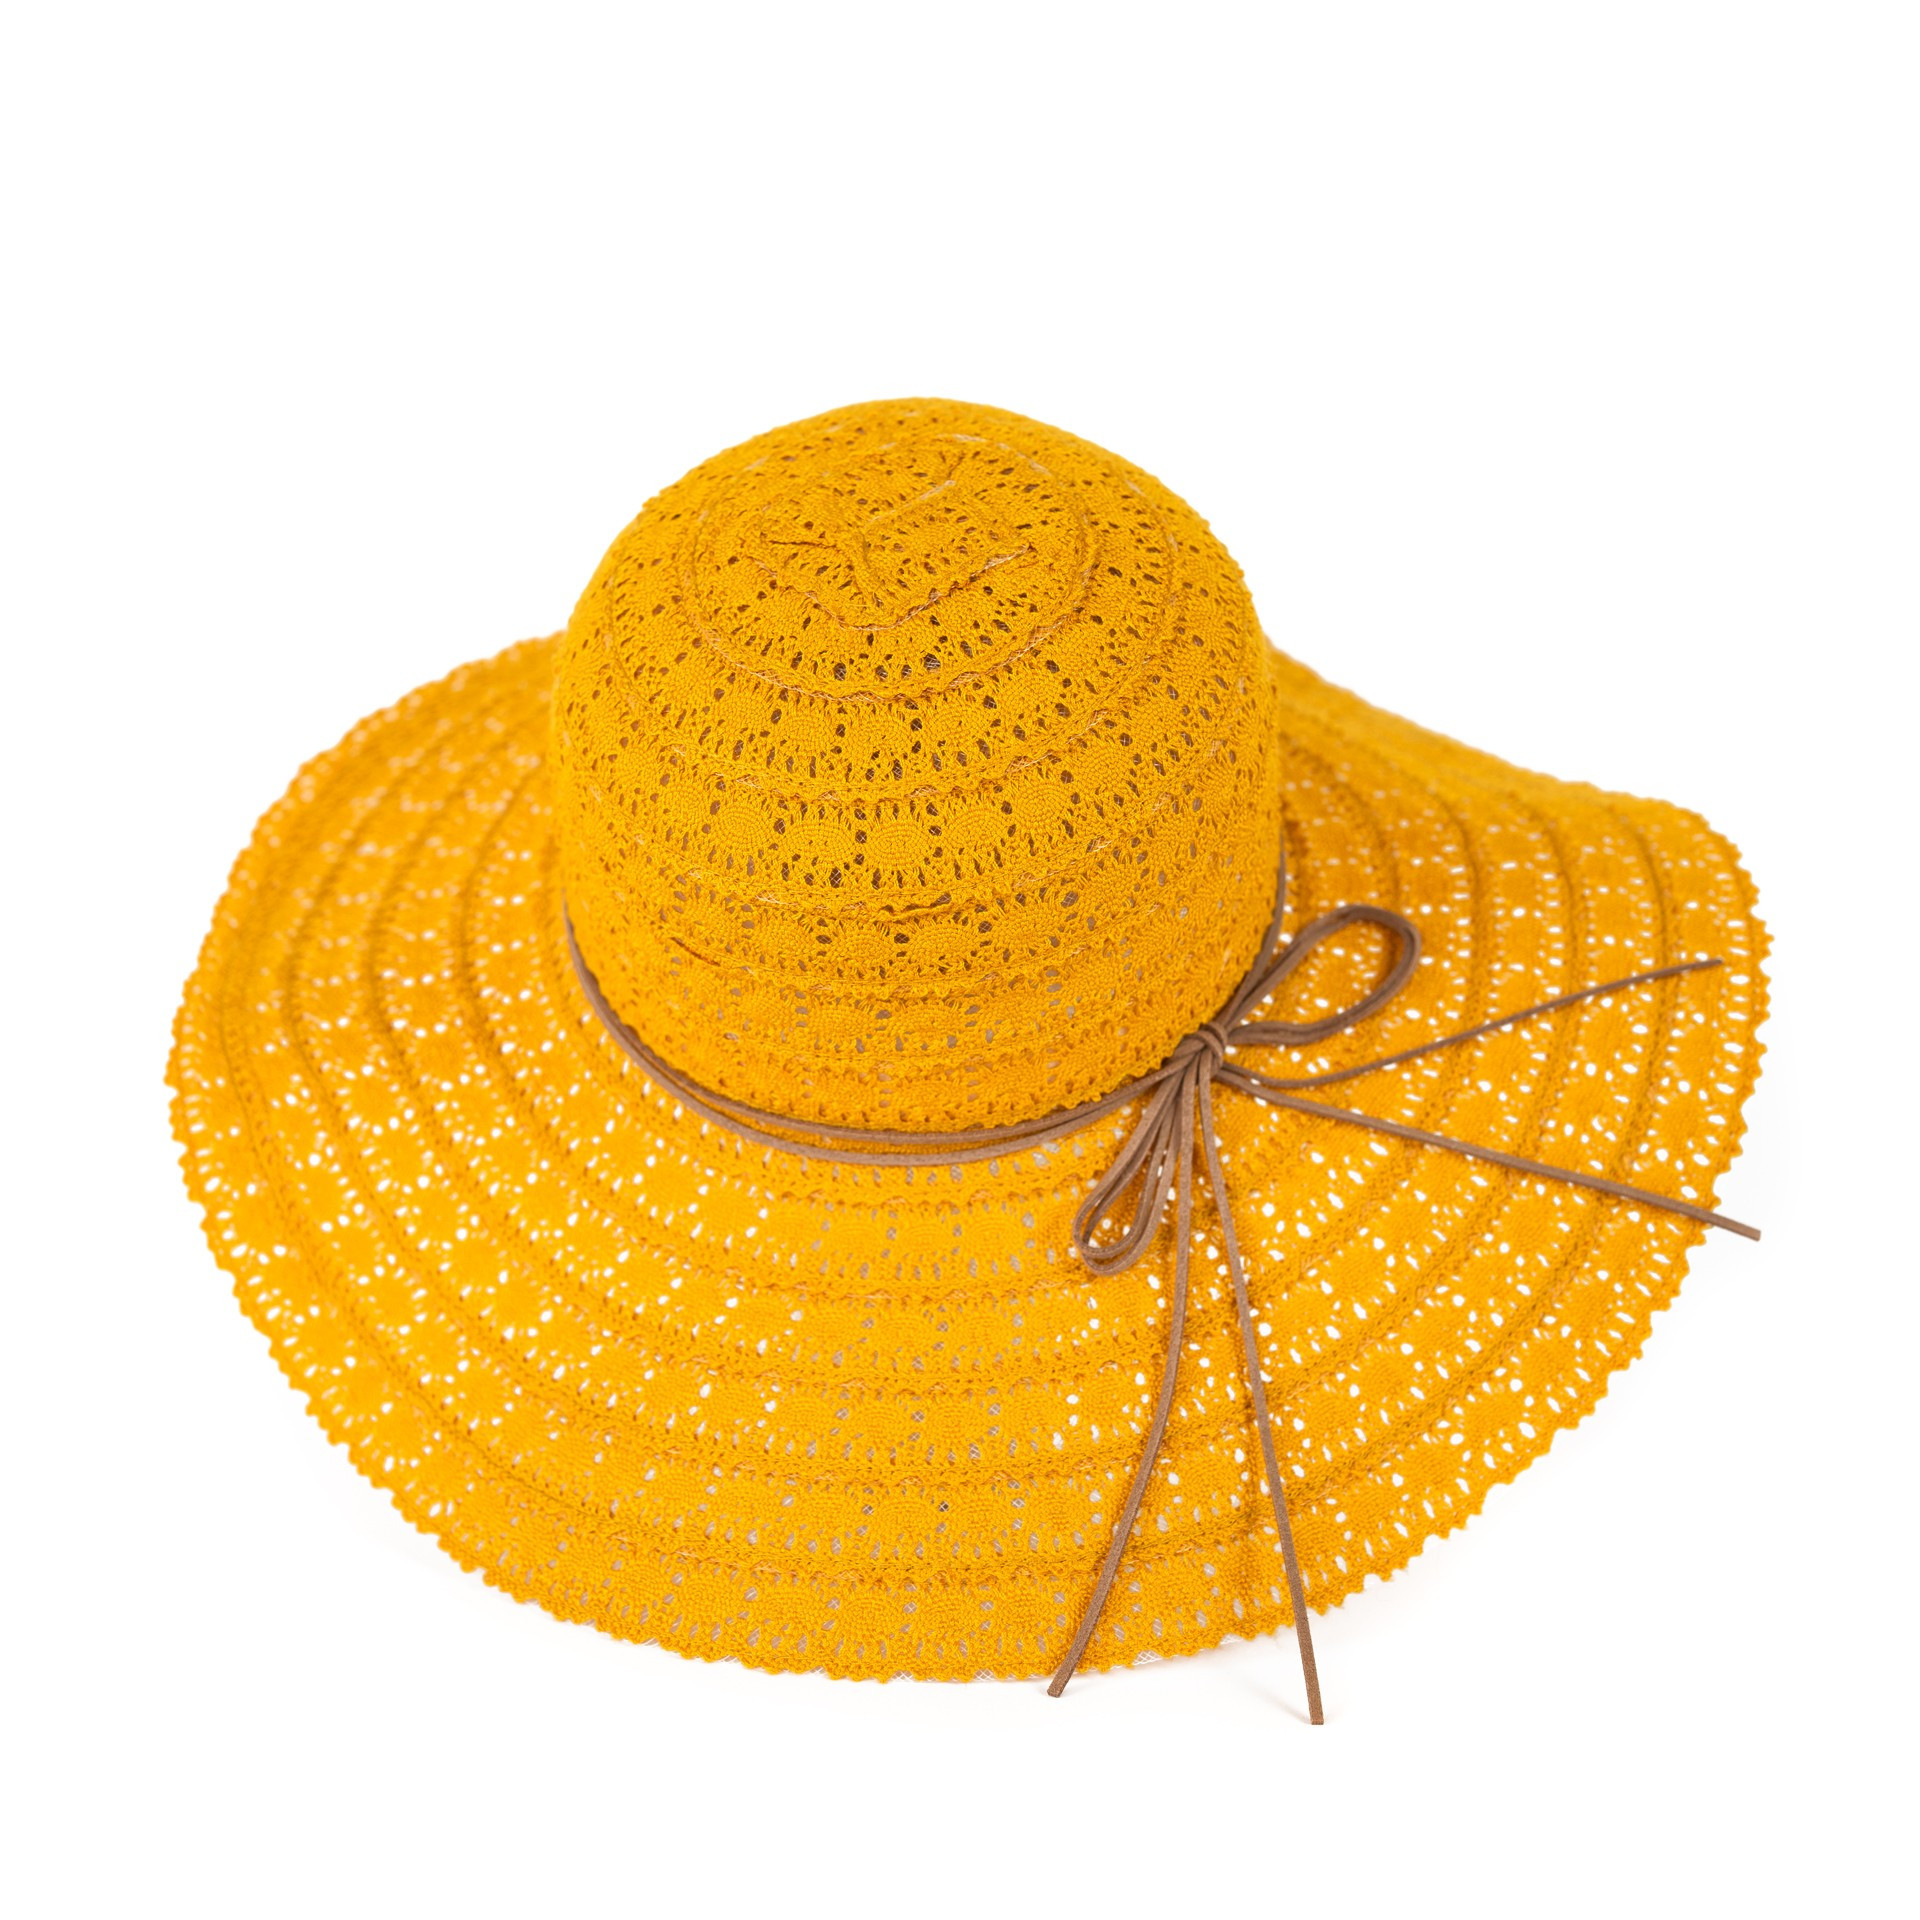 Art of Polo Hat Cz23107-1 Yellow UNI